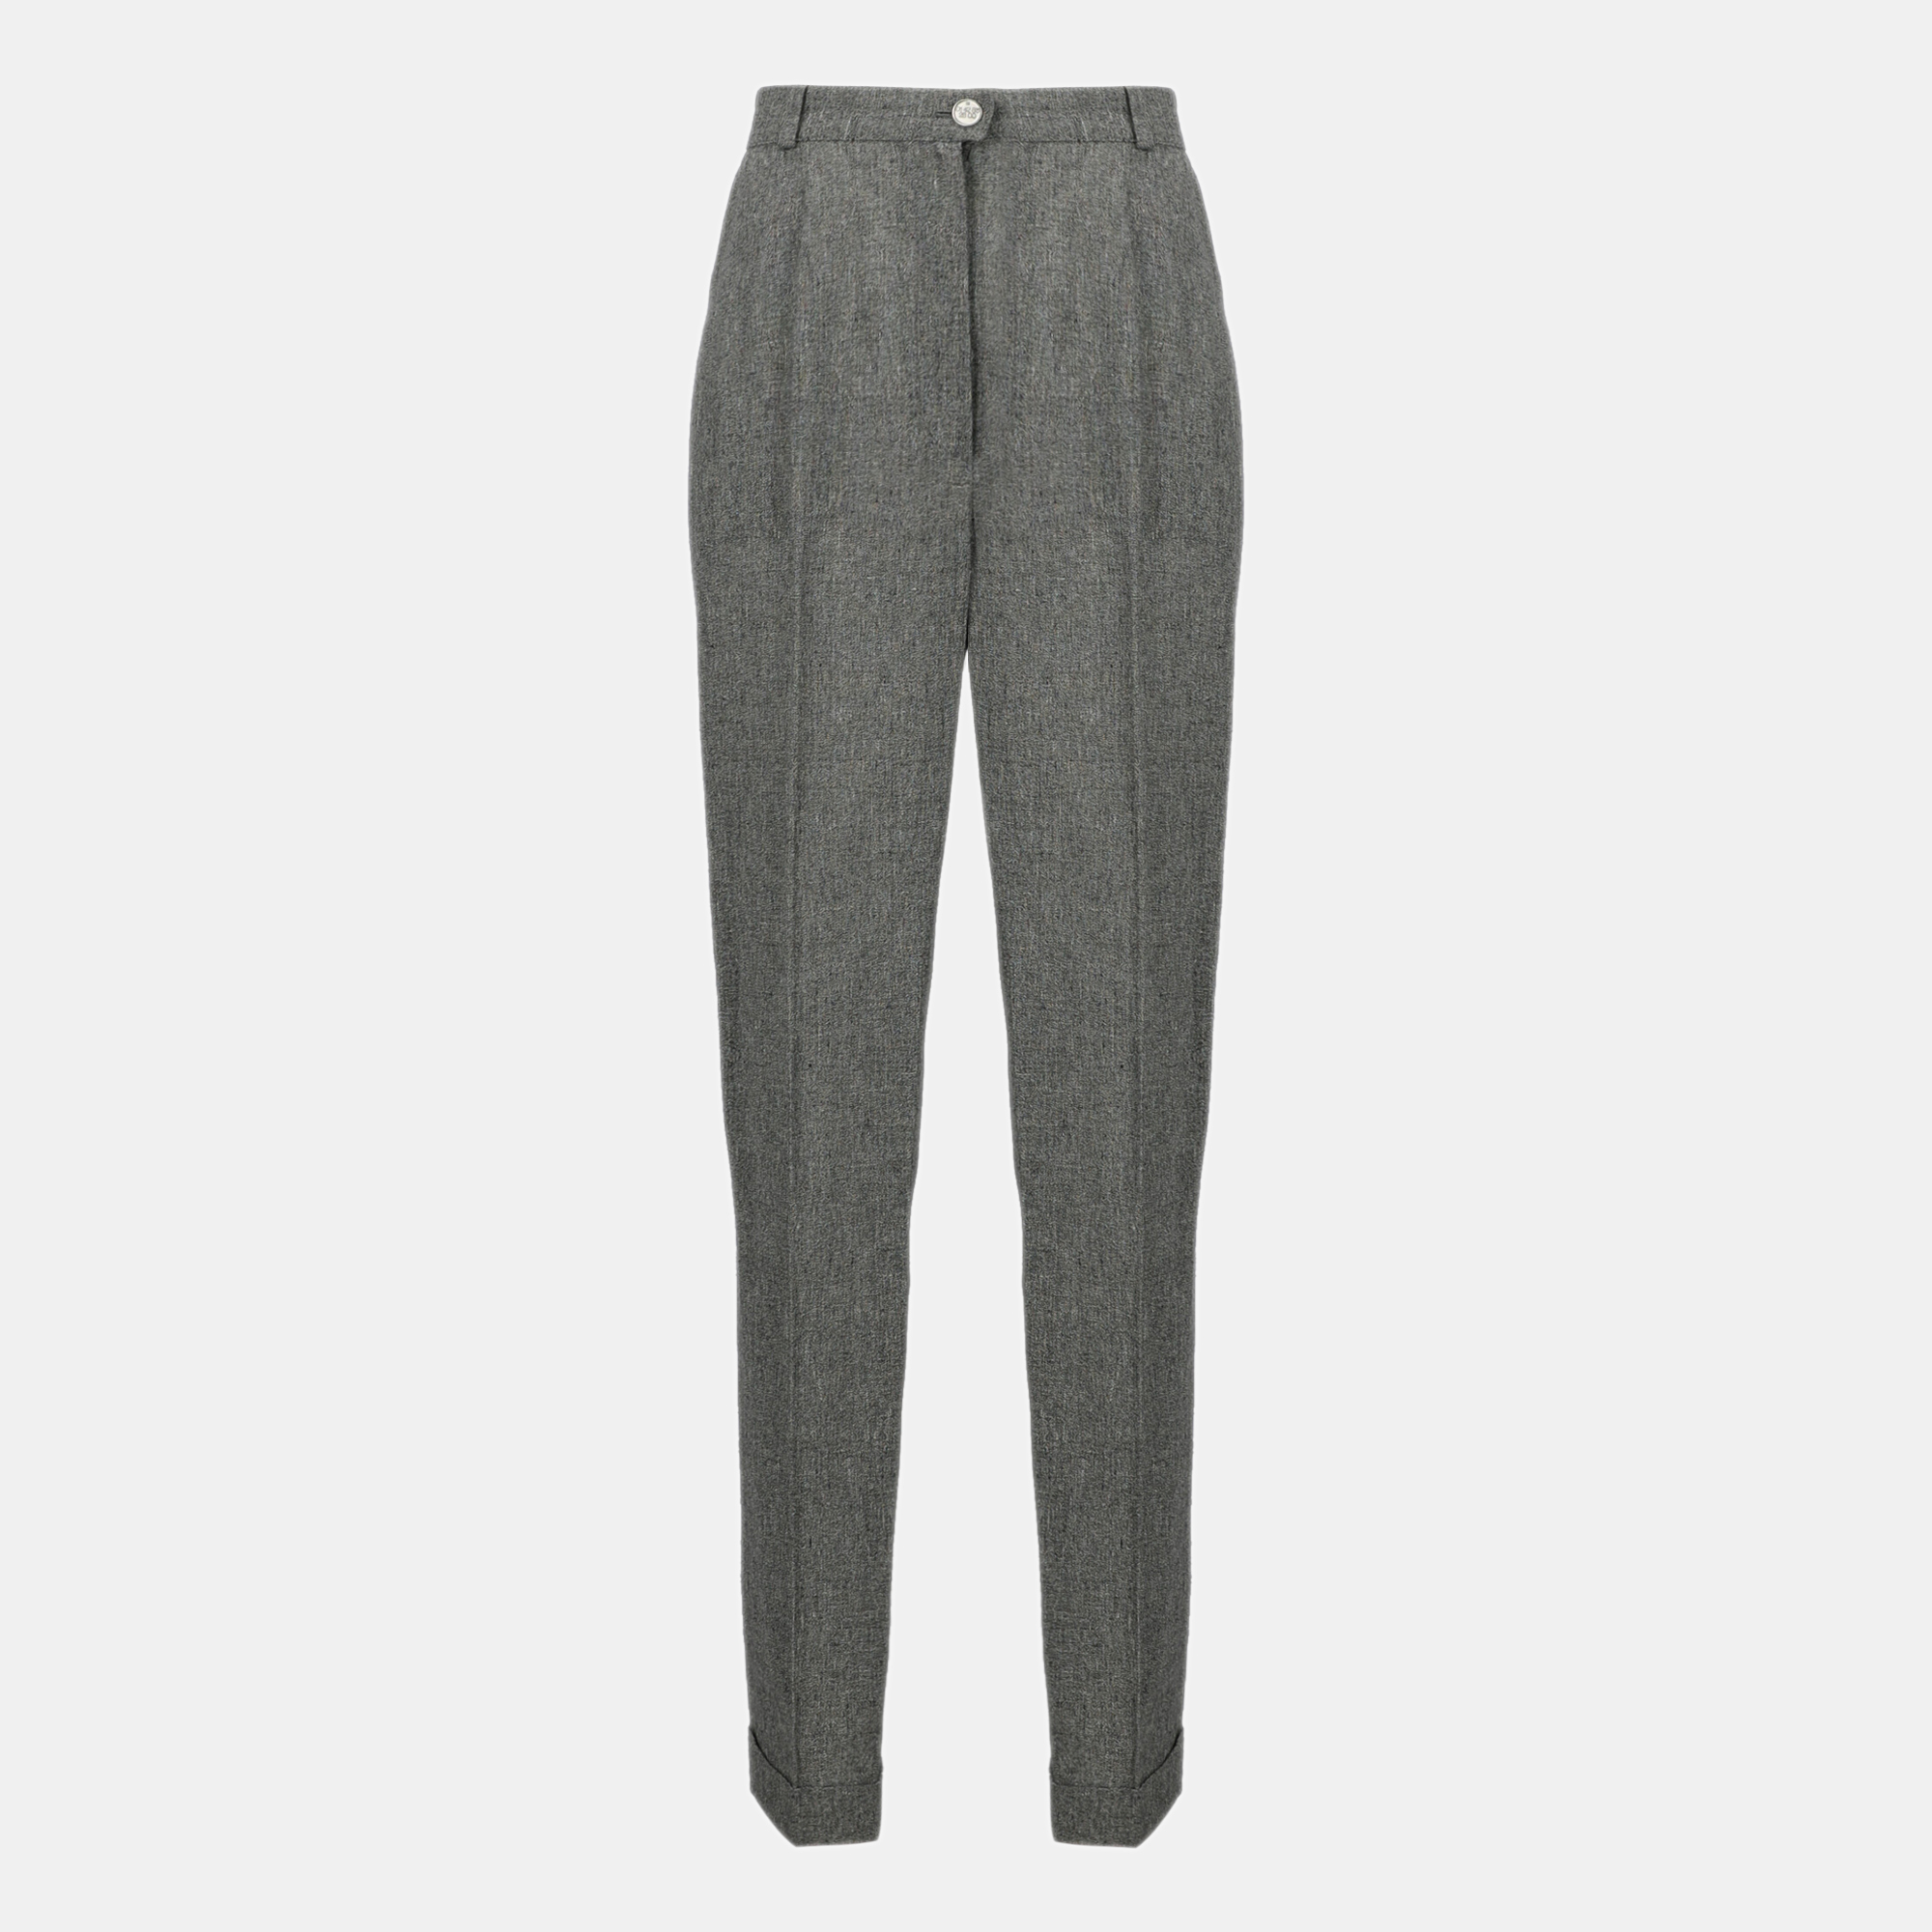 Chanel  Women's Eco-Friendly Fabric Pant Set - Grey - M